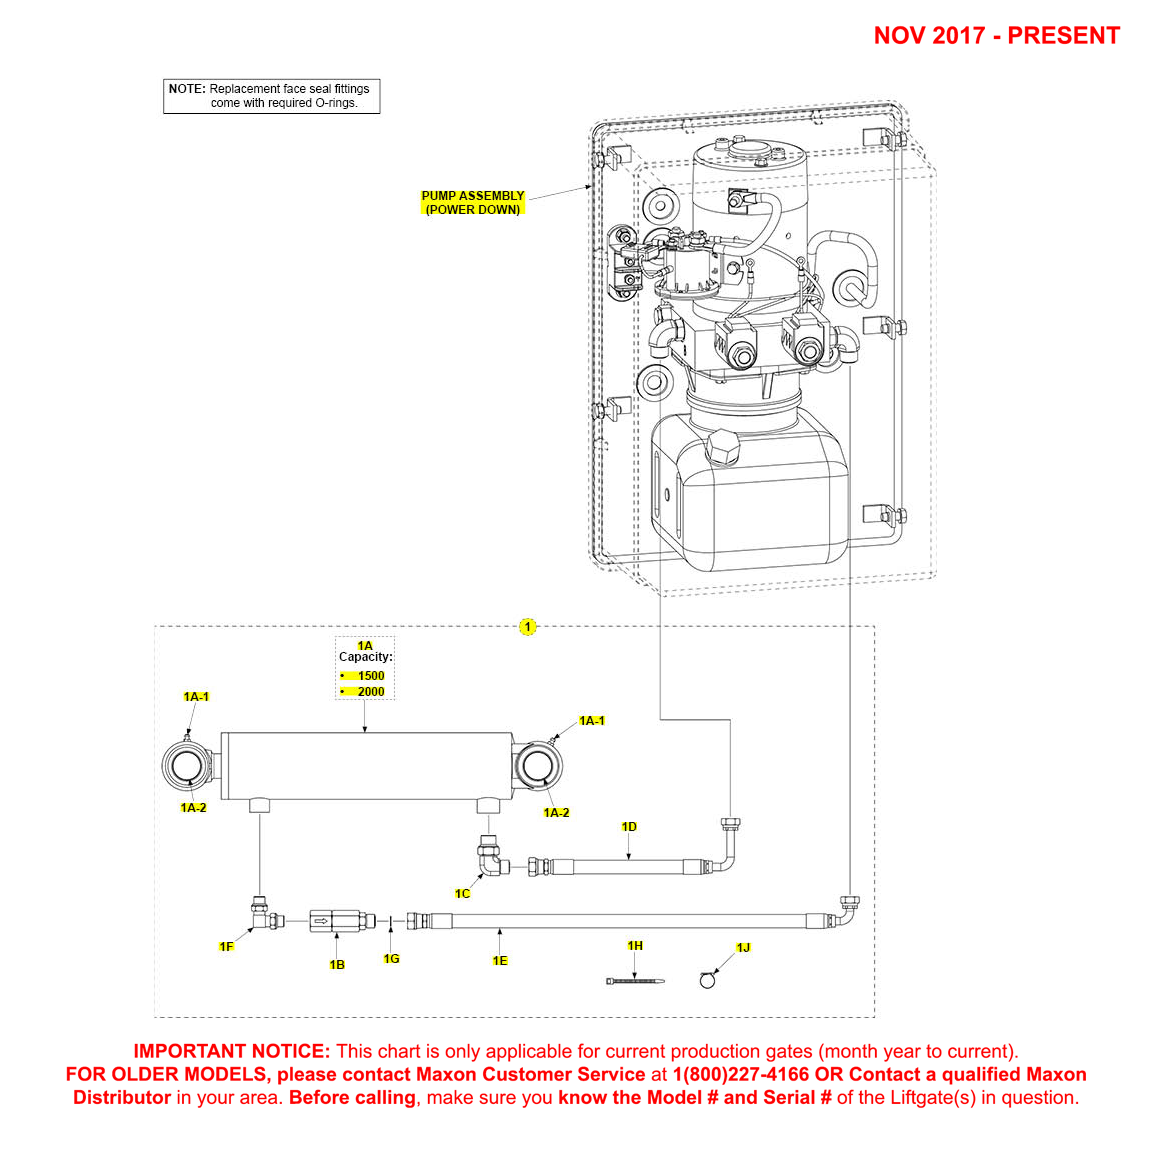 Maxon TE-15 And TE-20 (Nov 2017 - Present) Power Down Hydraulic System Diagram